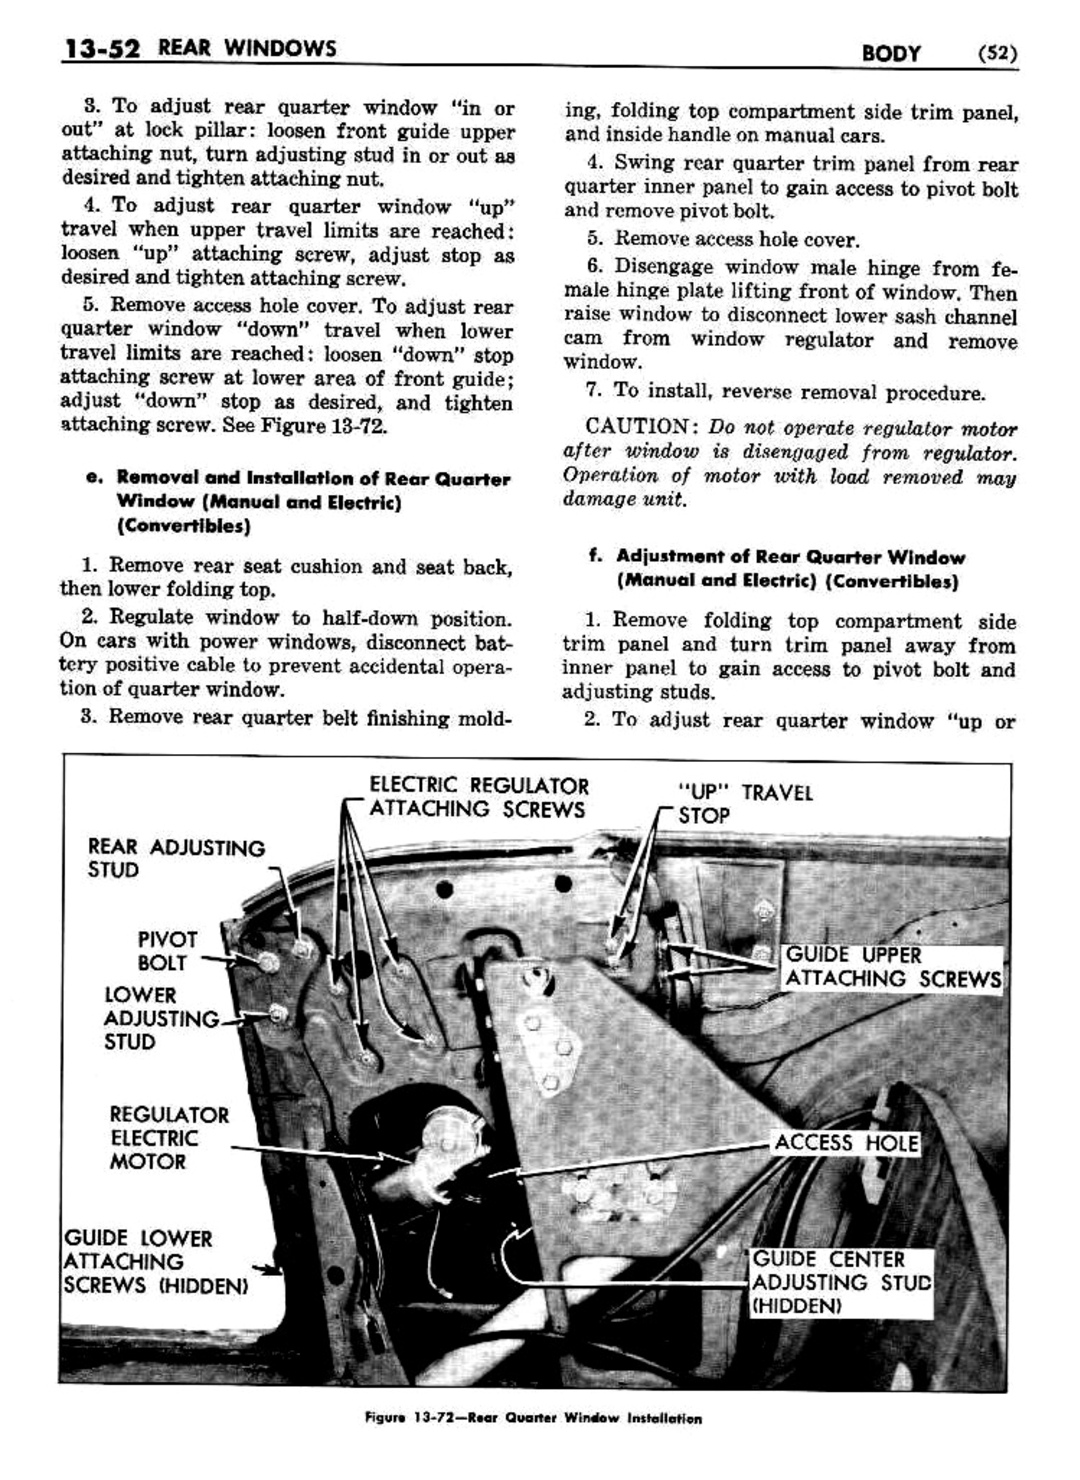 n_1958 Buick Body Service Manual-053-053.jpg